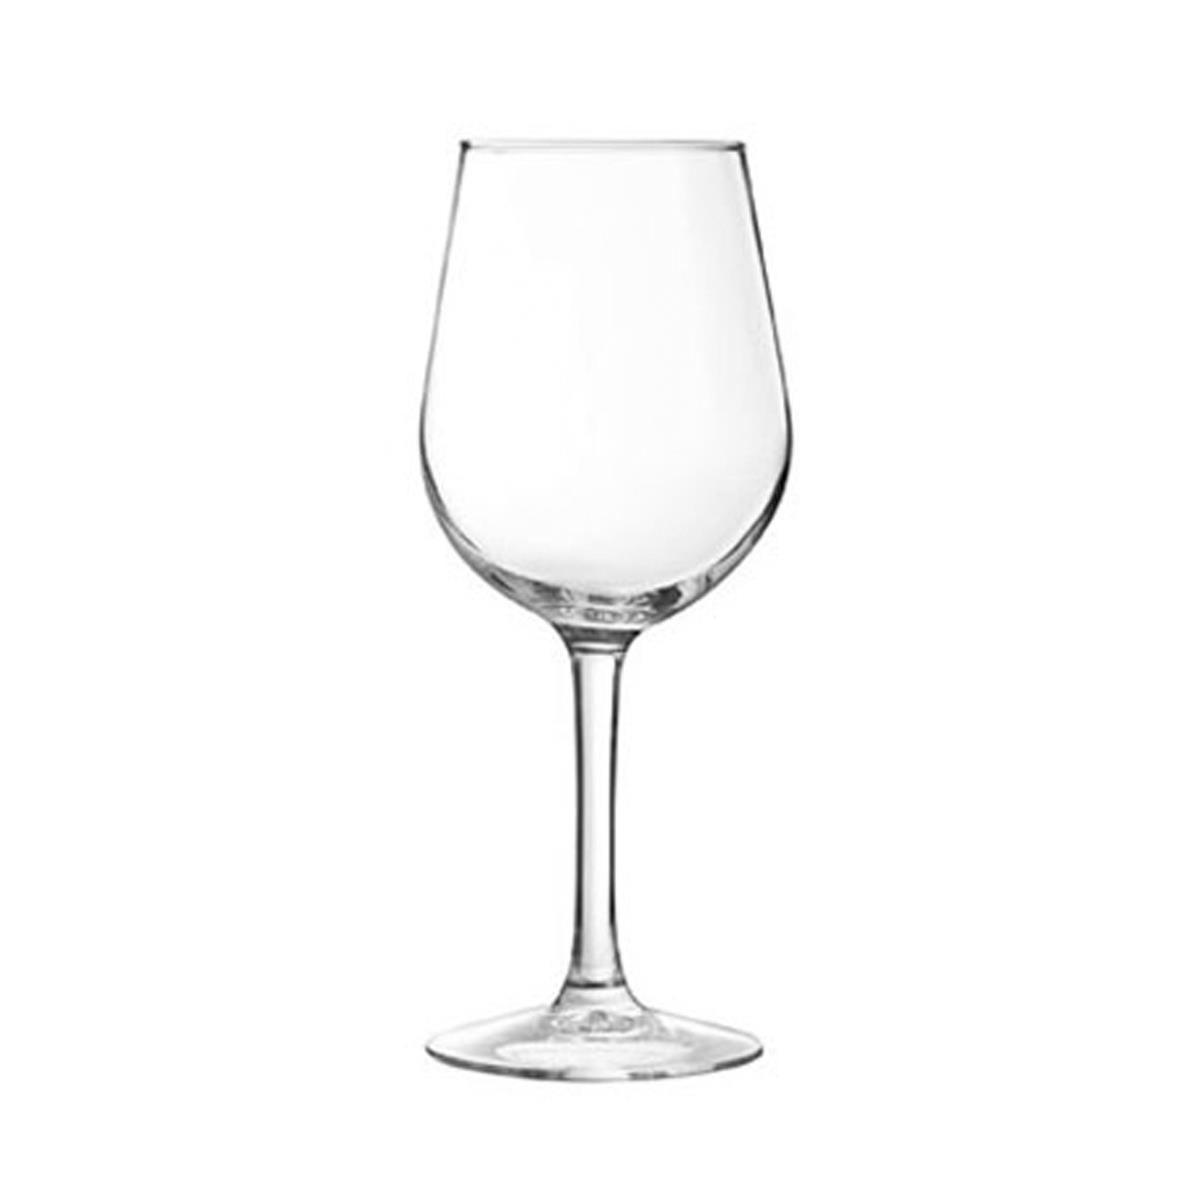 Domaine Weinglas gravieren oder bedrucken lassen